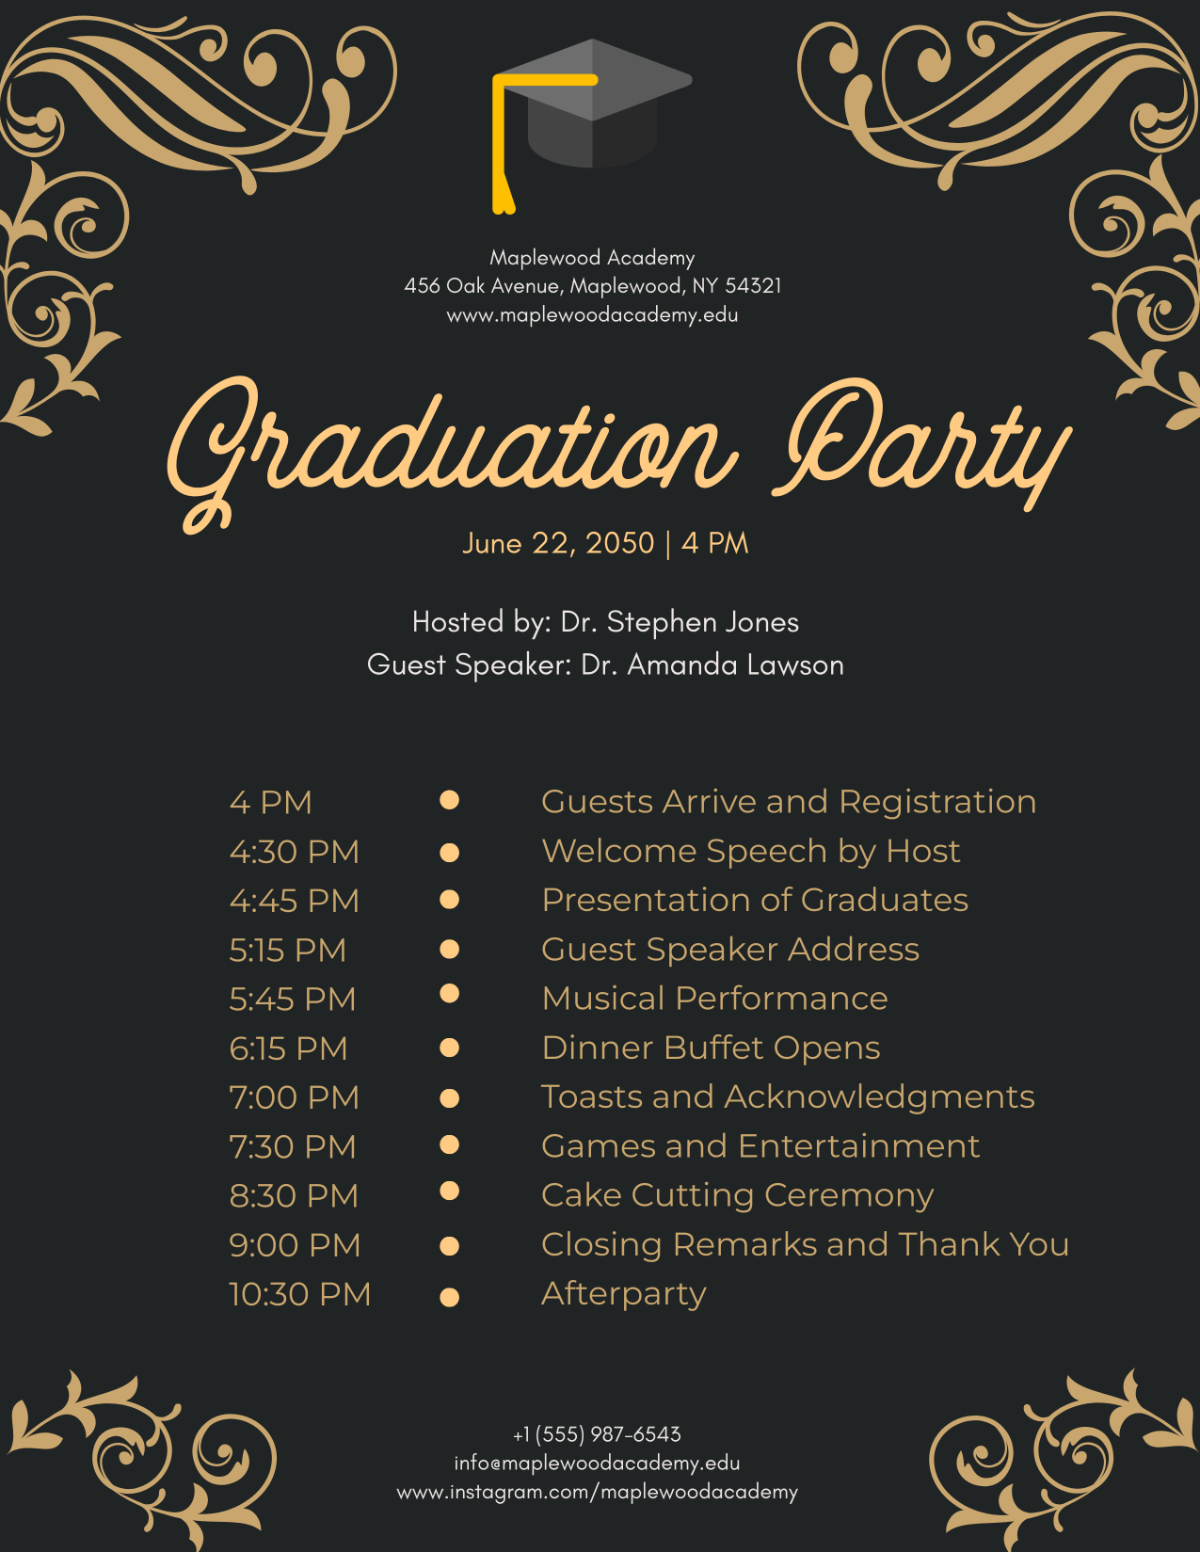 Graduation Party Program